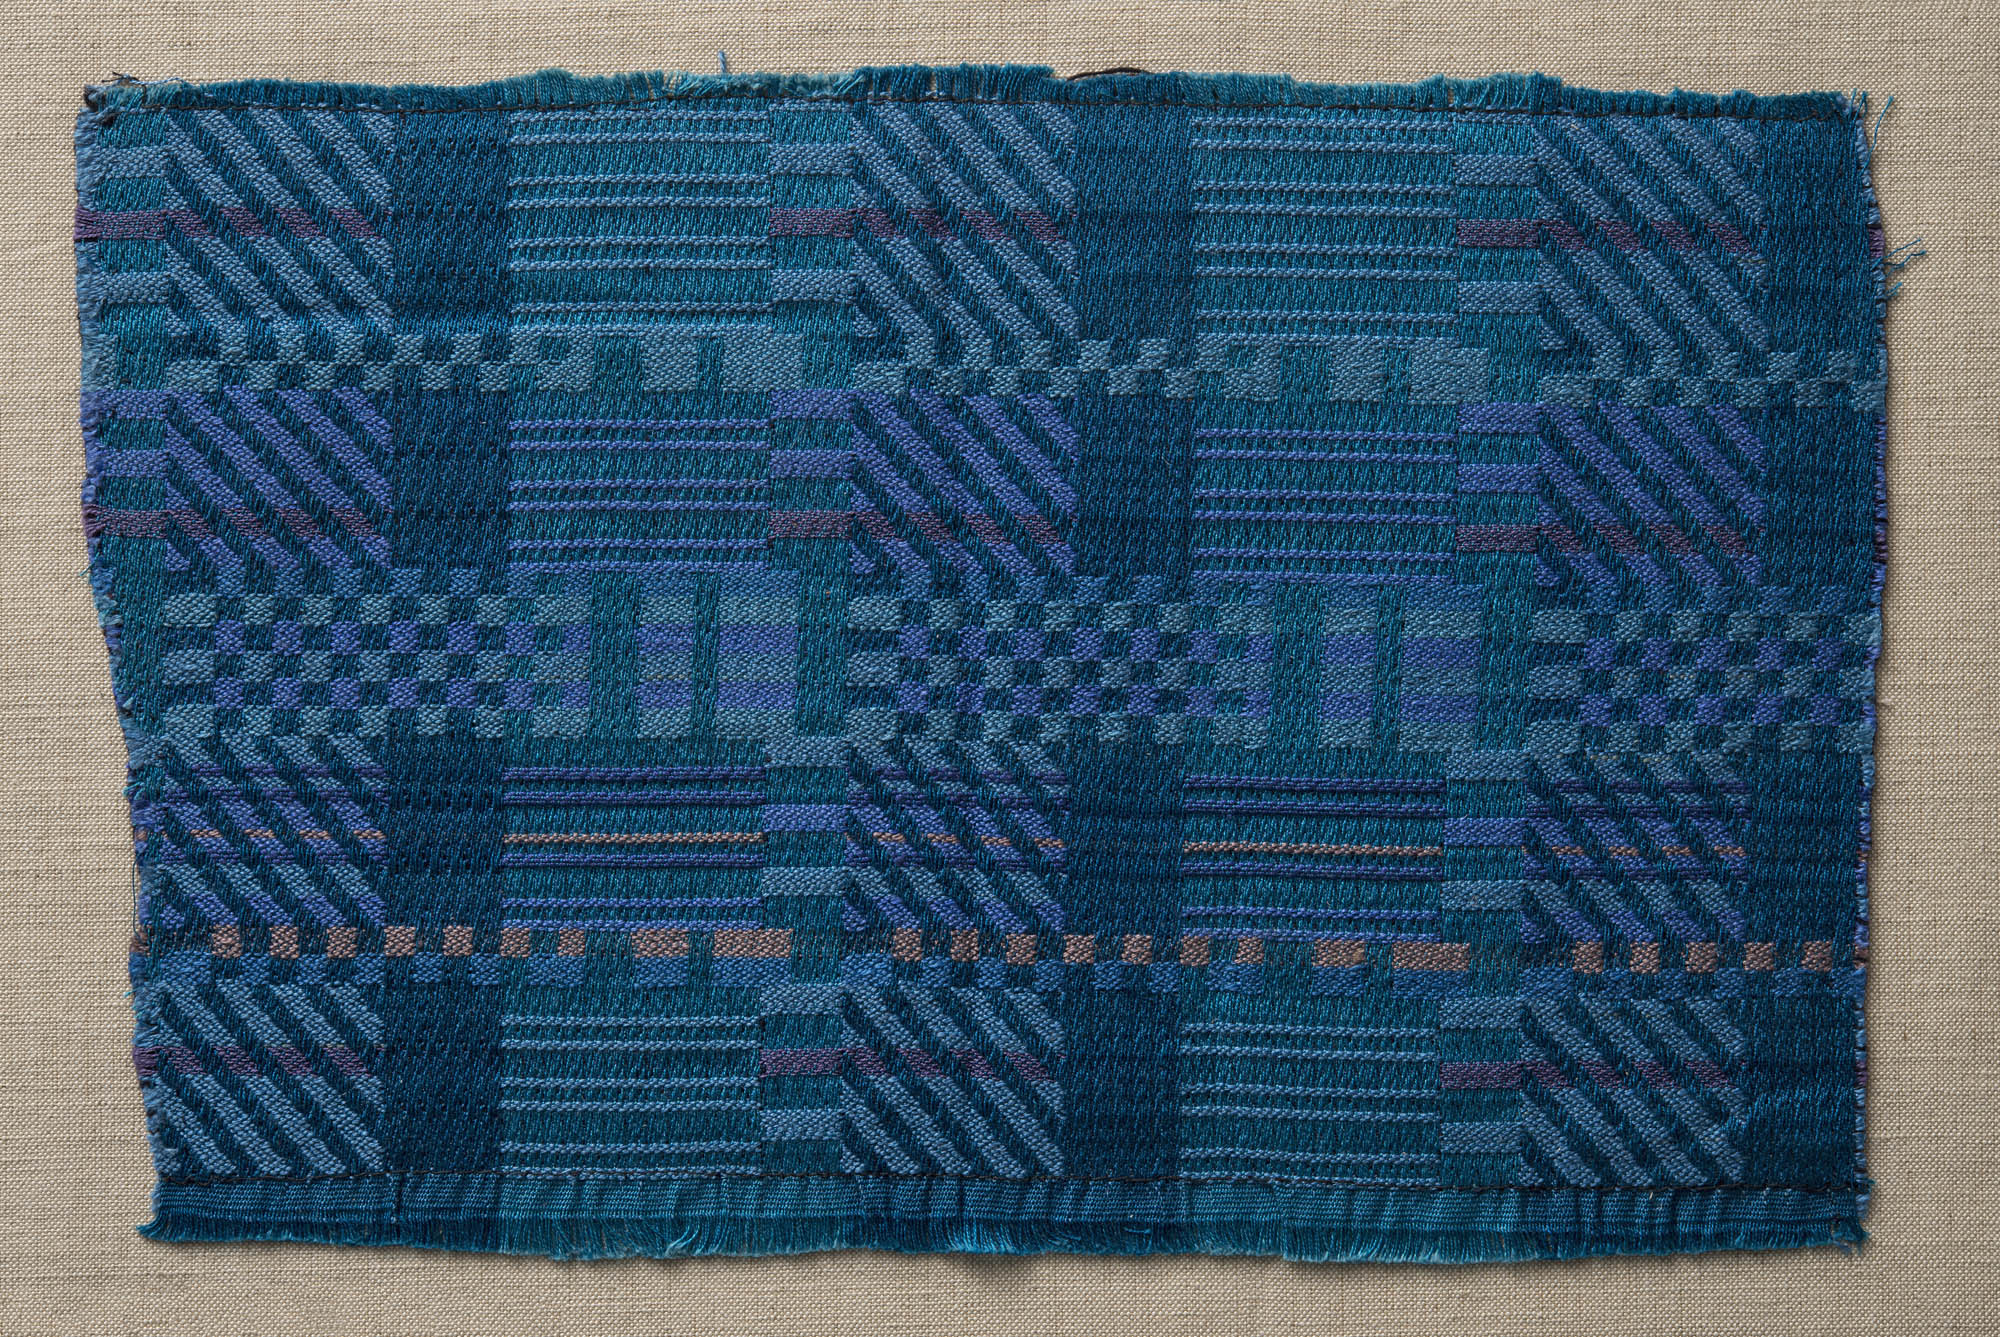 (untitled) Gunta Stölzl Weaving pattern for throw blanket